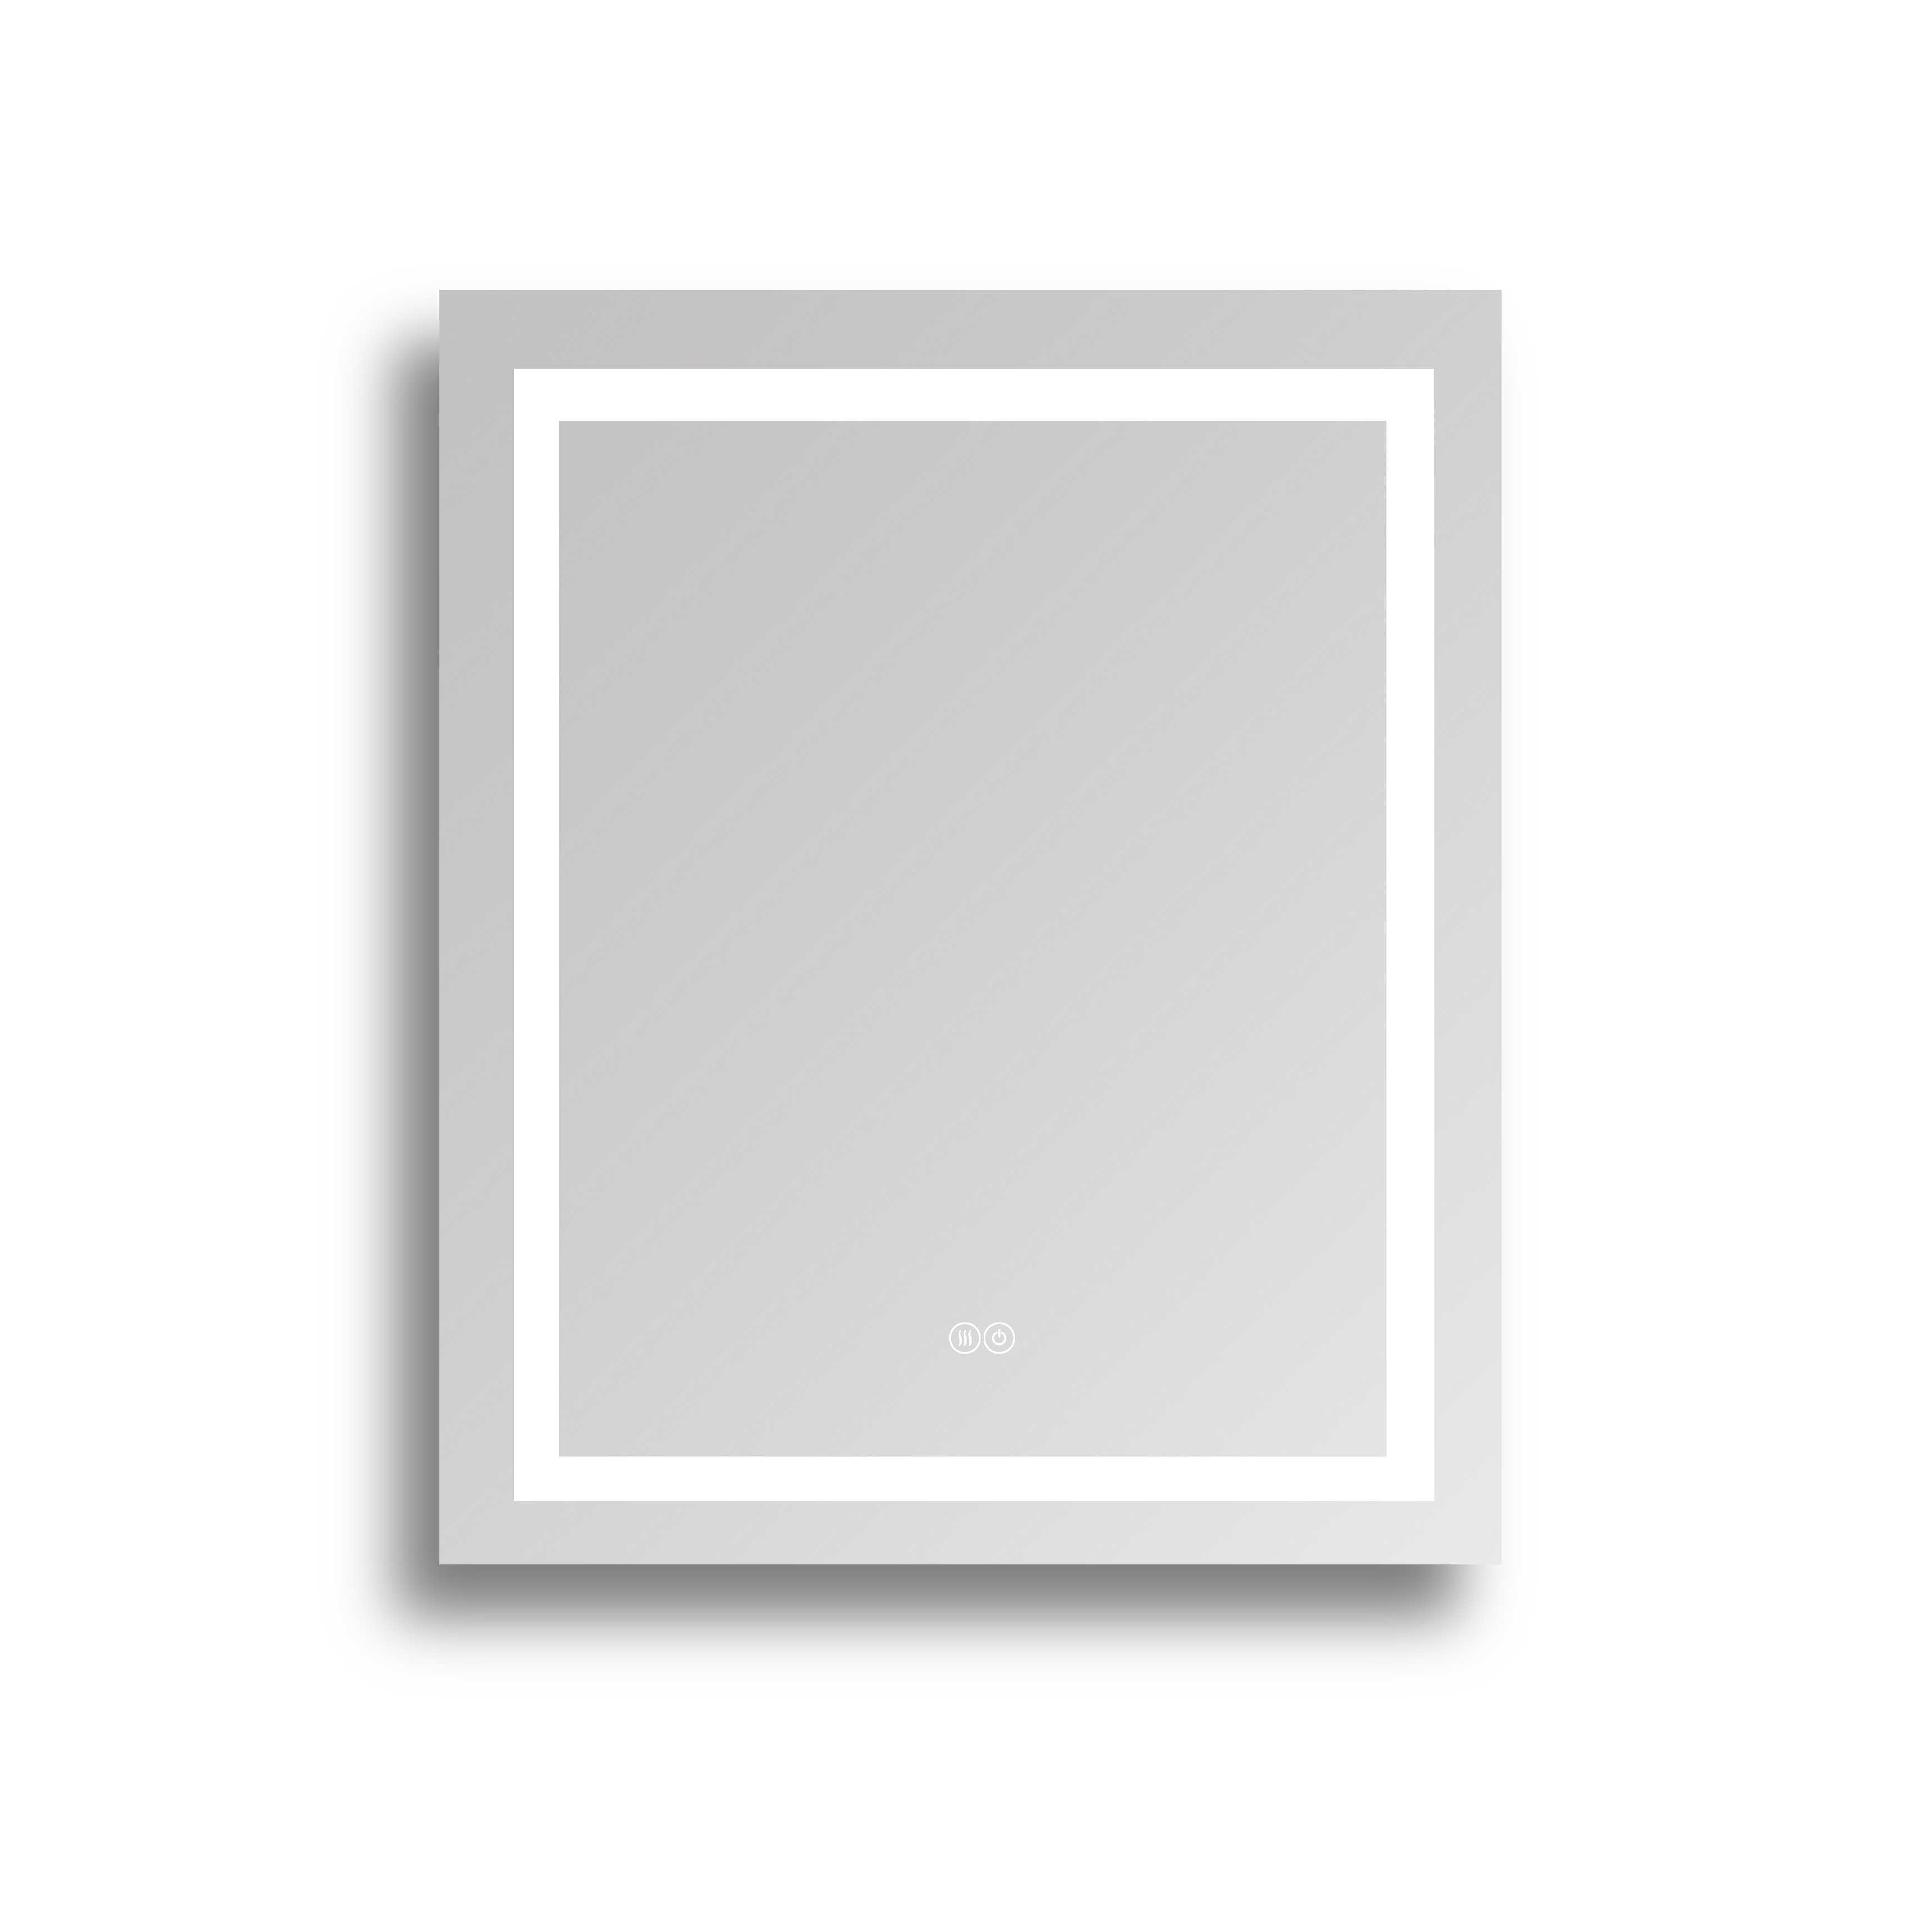 Superior Rectangular Frameless Anti-Fog Wall Bathroom LED Vanity Mirror in Silver - 24